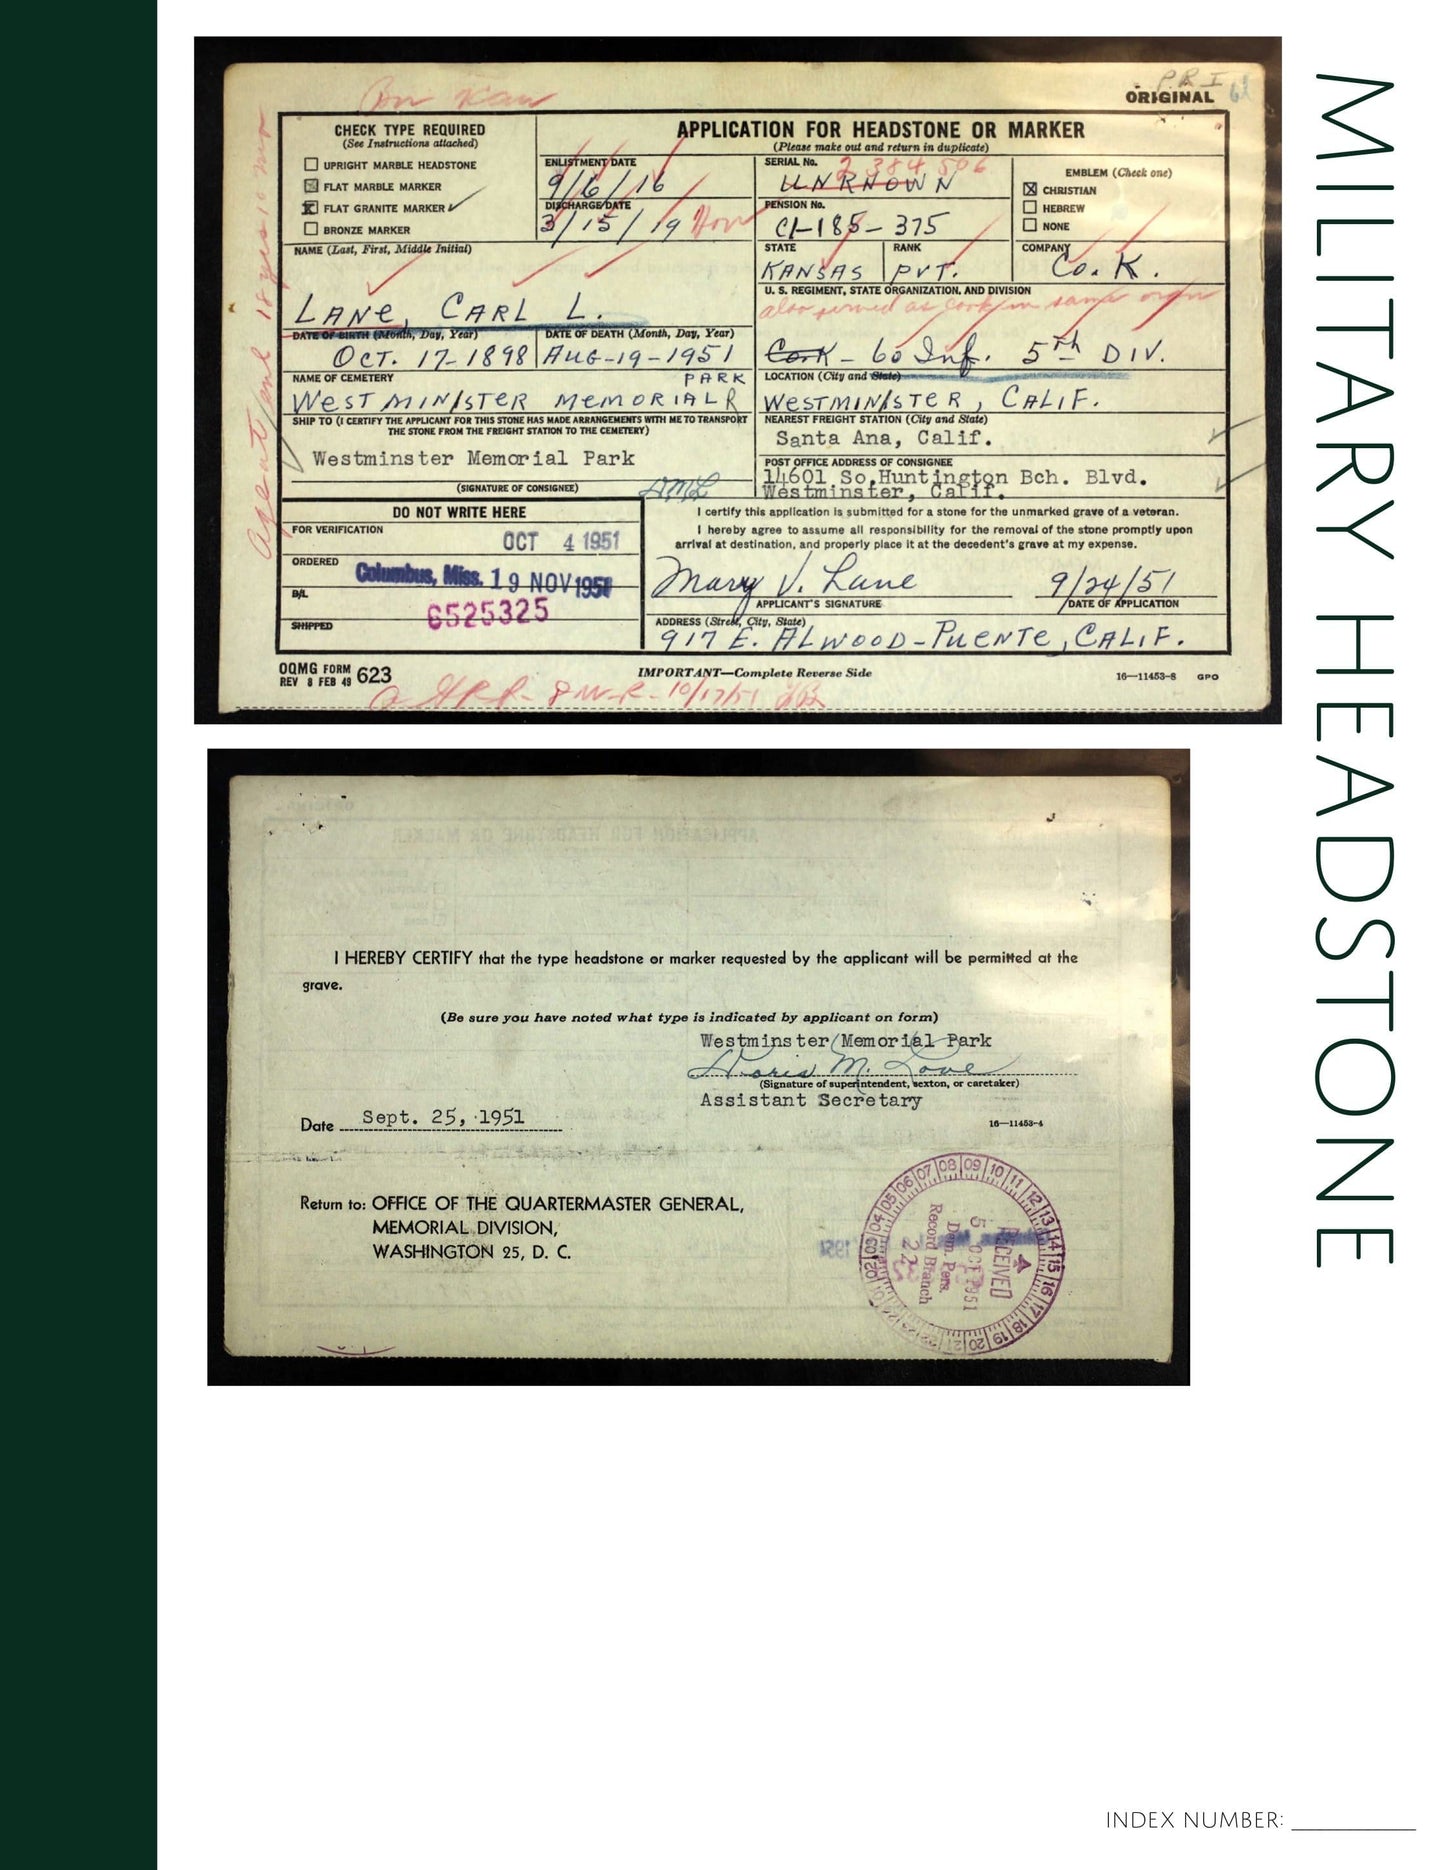 Military Headstone: Printable Genealogy Form (Digital Download)